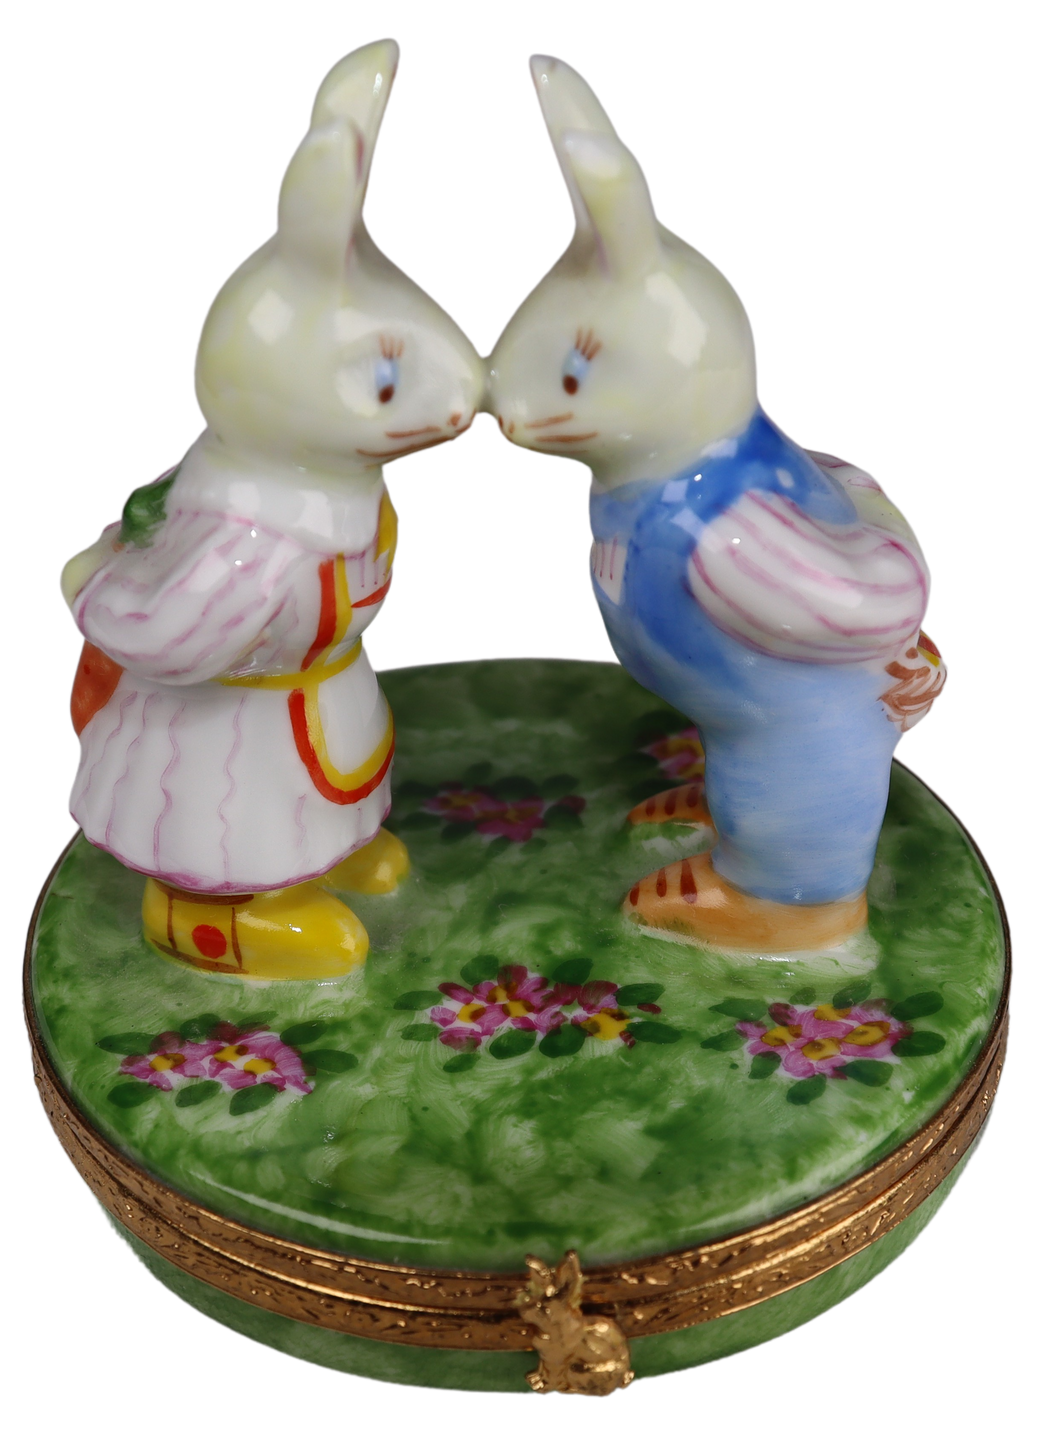 SKU# 6361 - Mr. and Mrs. Rabbit